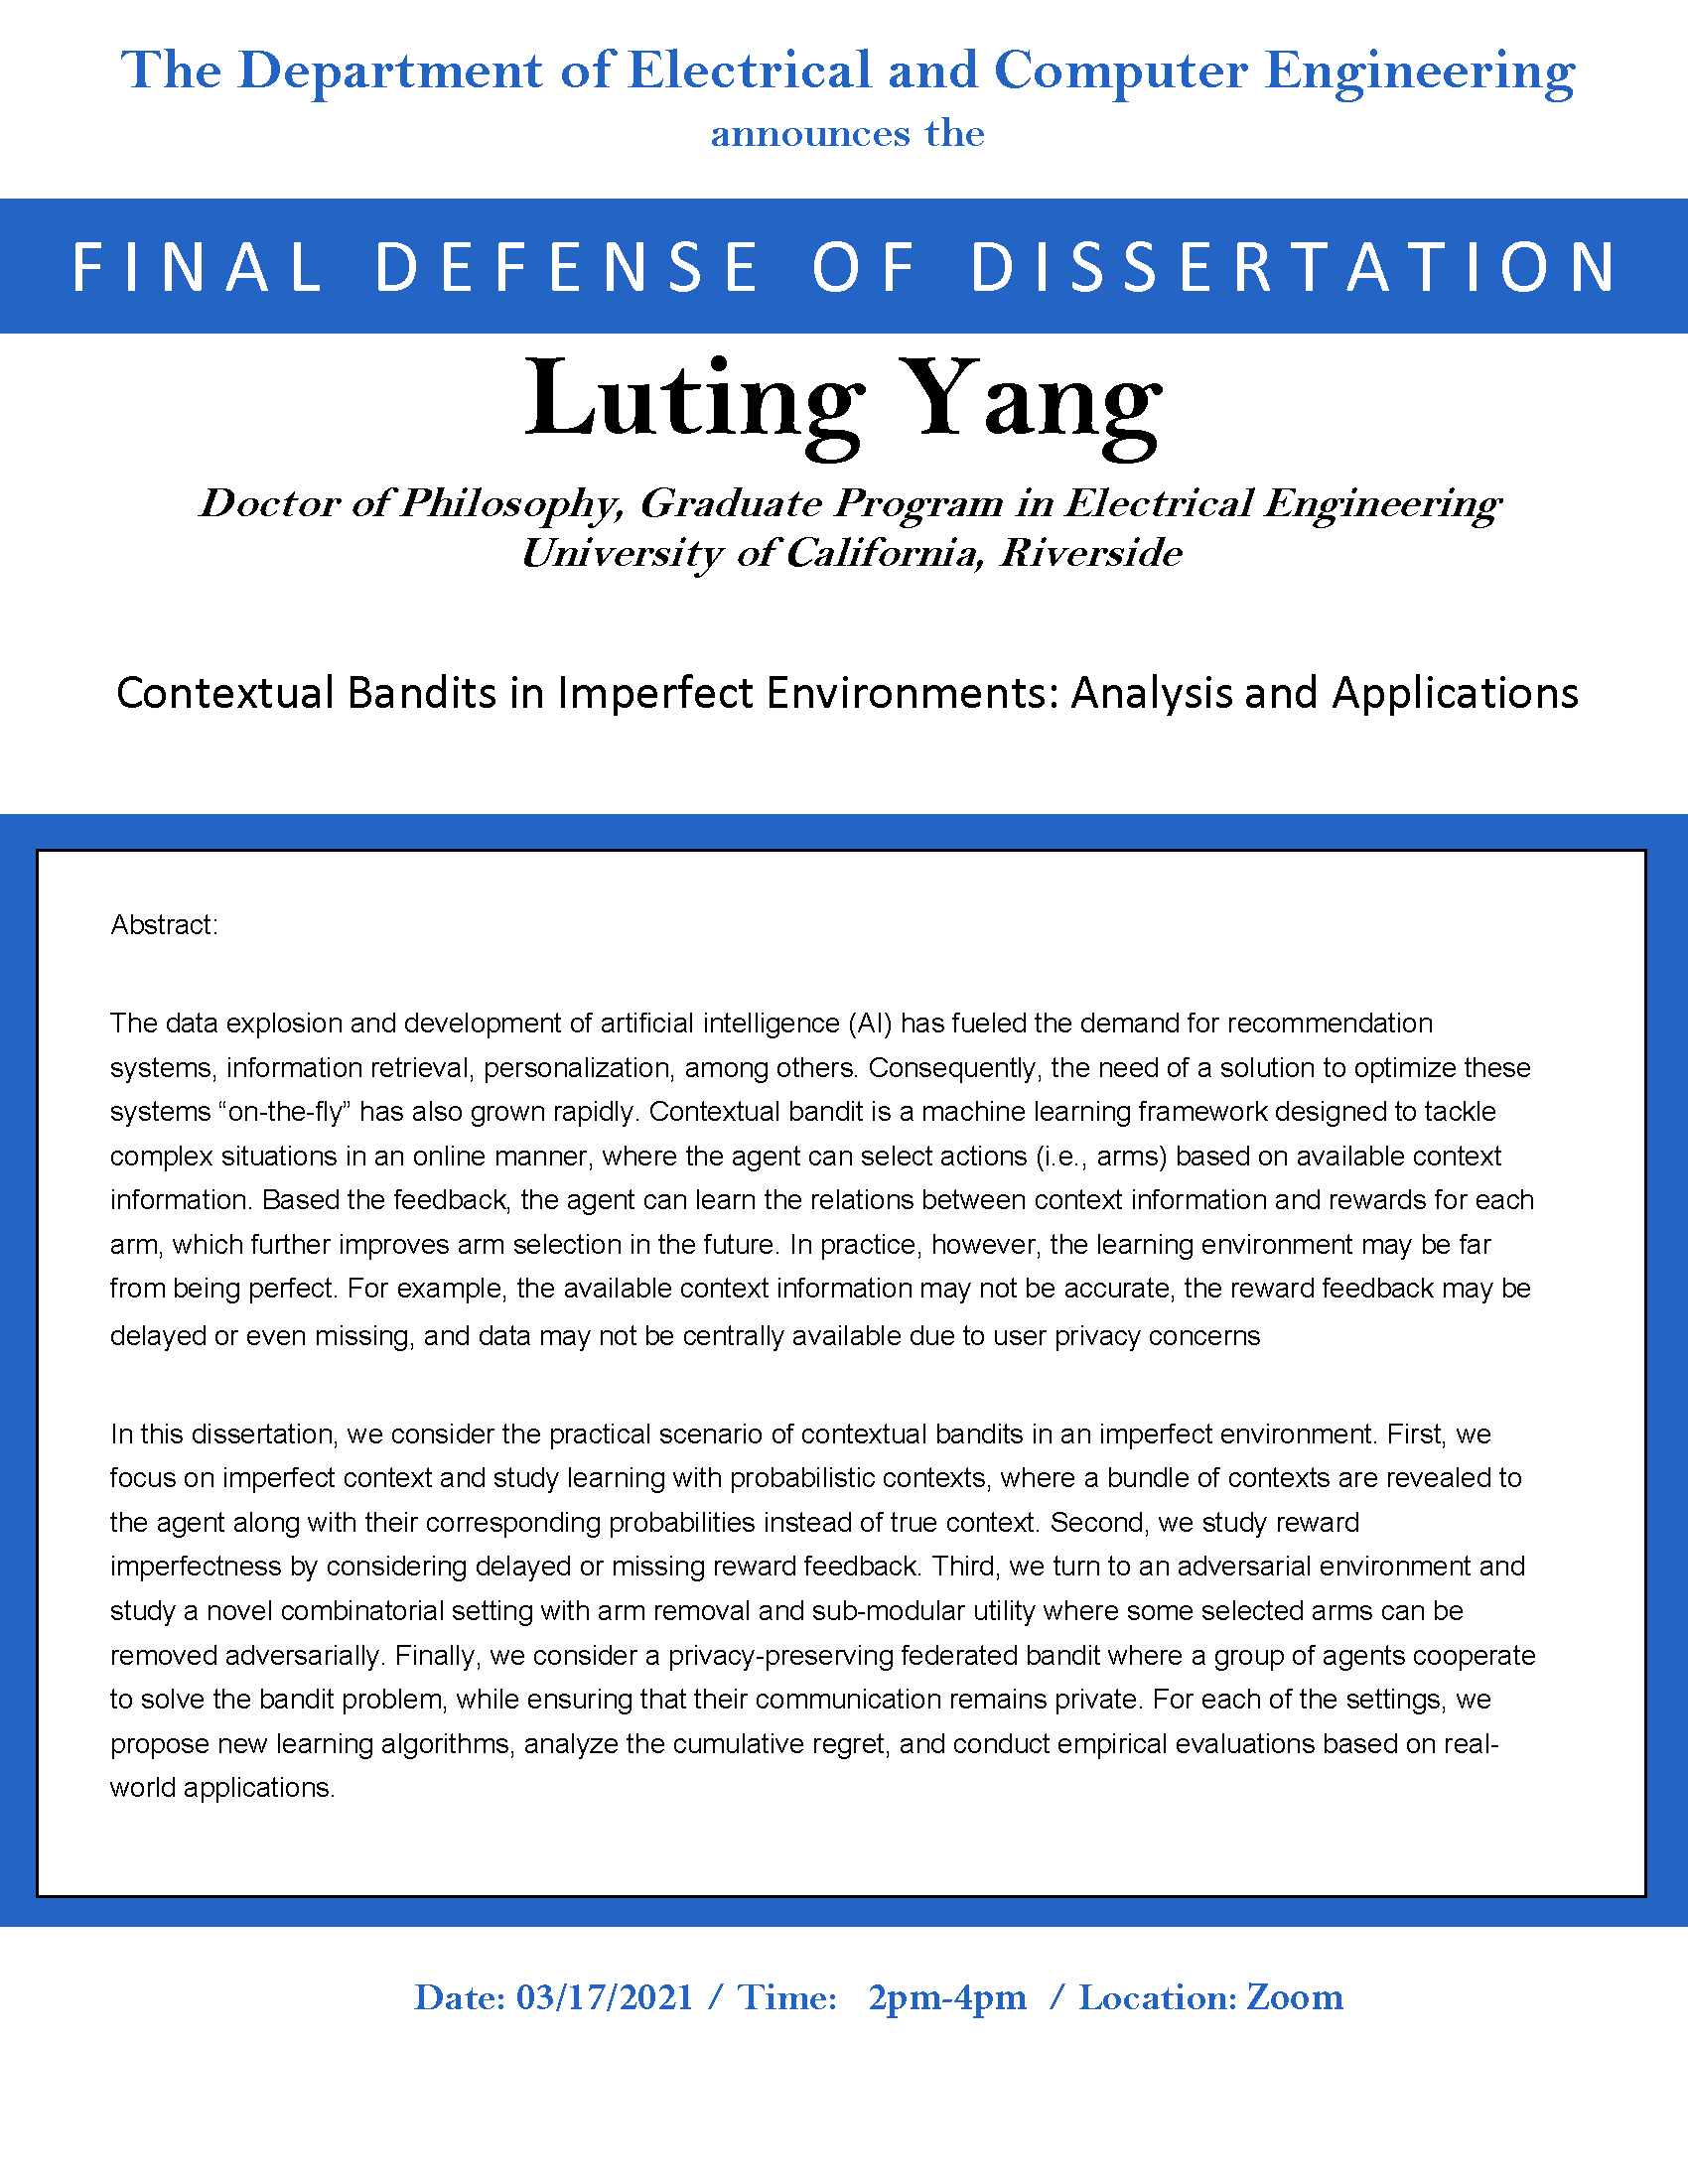 Final Defense of Dissertation: Luting Yang